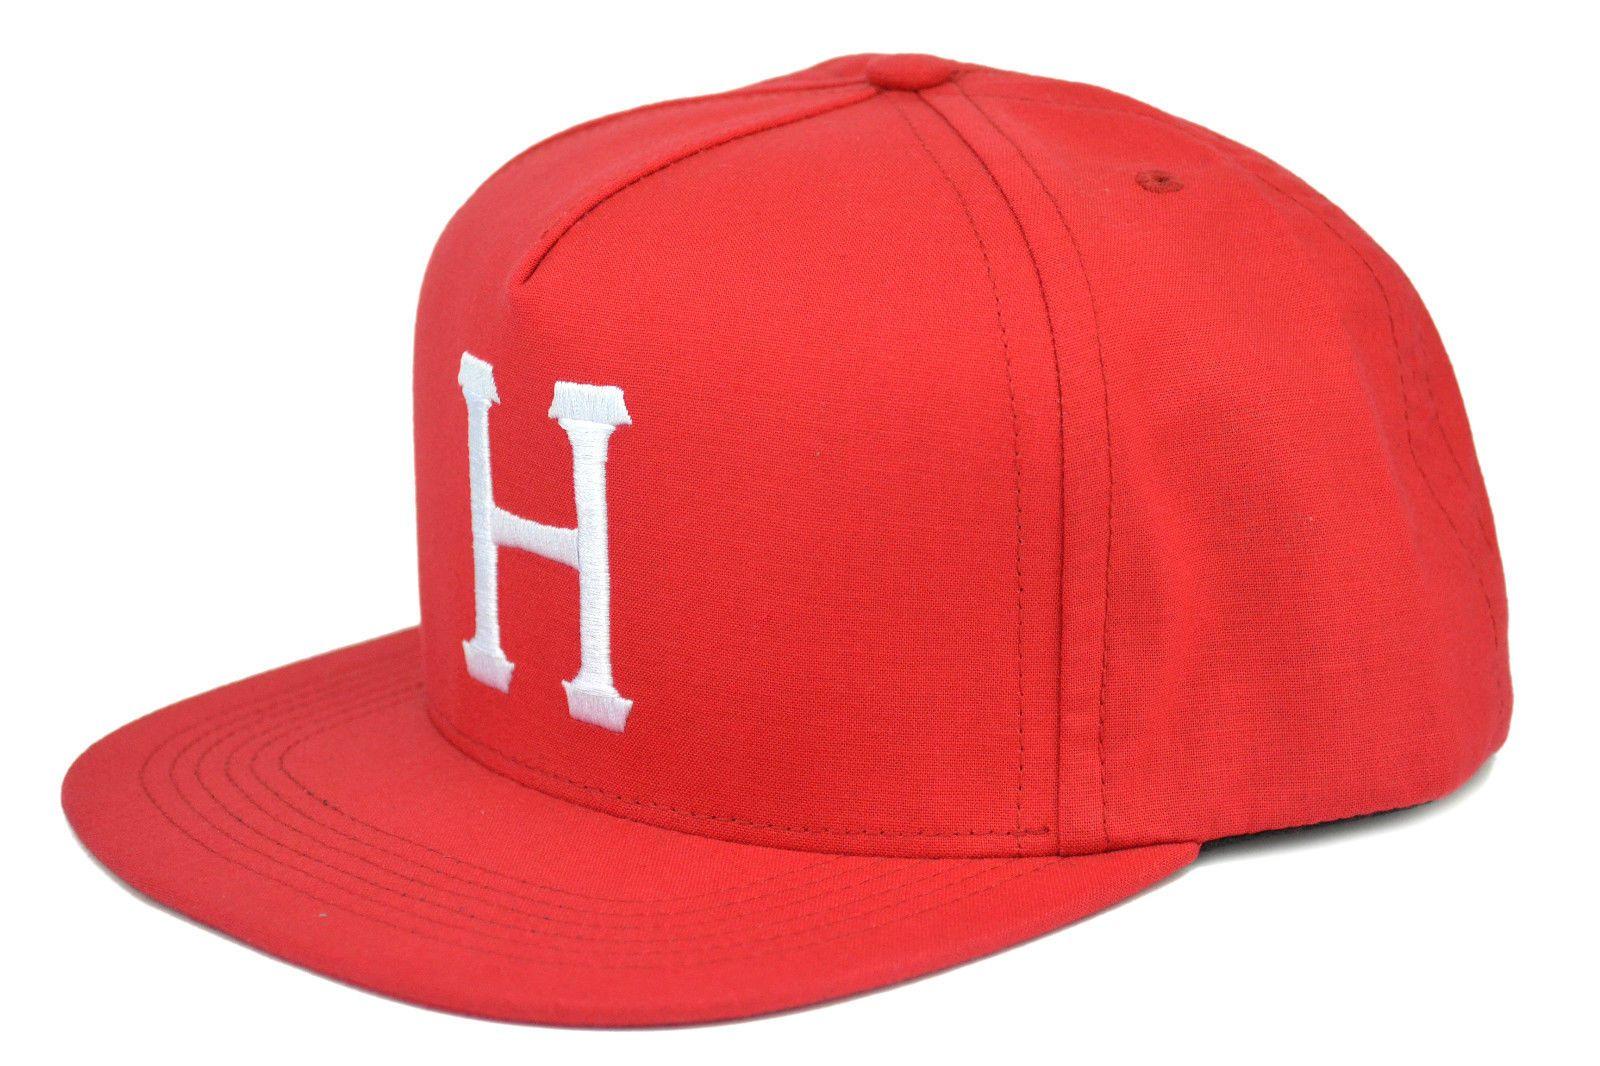 HUF H Logo - HUF CLASSIC H LOGO AUTHENTIC SNAPBACK CAP AUTHENTIC LOGO